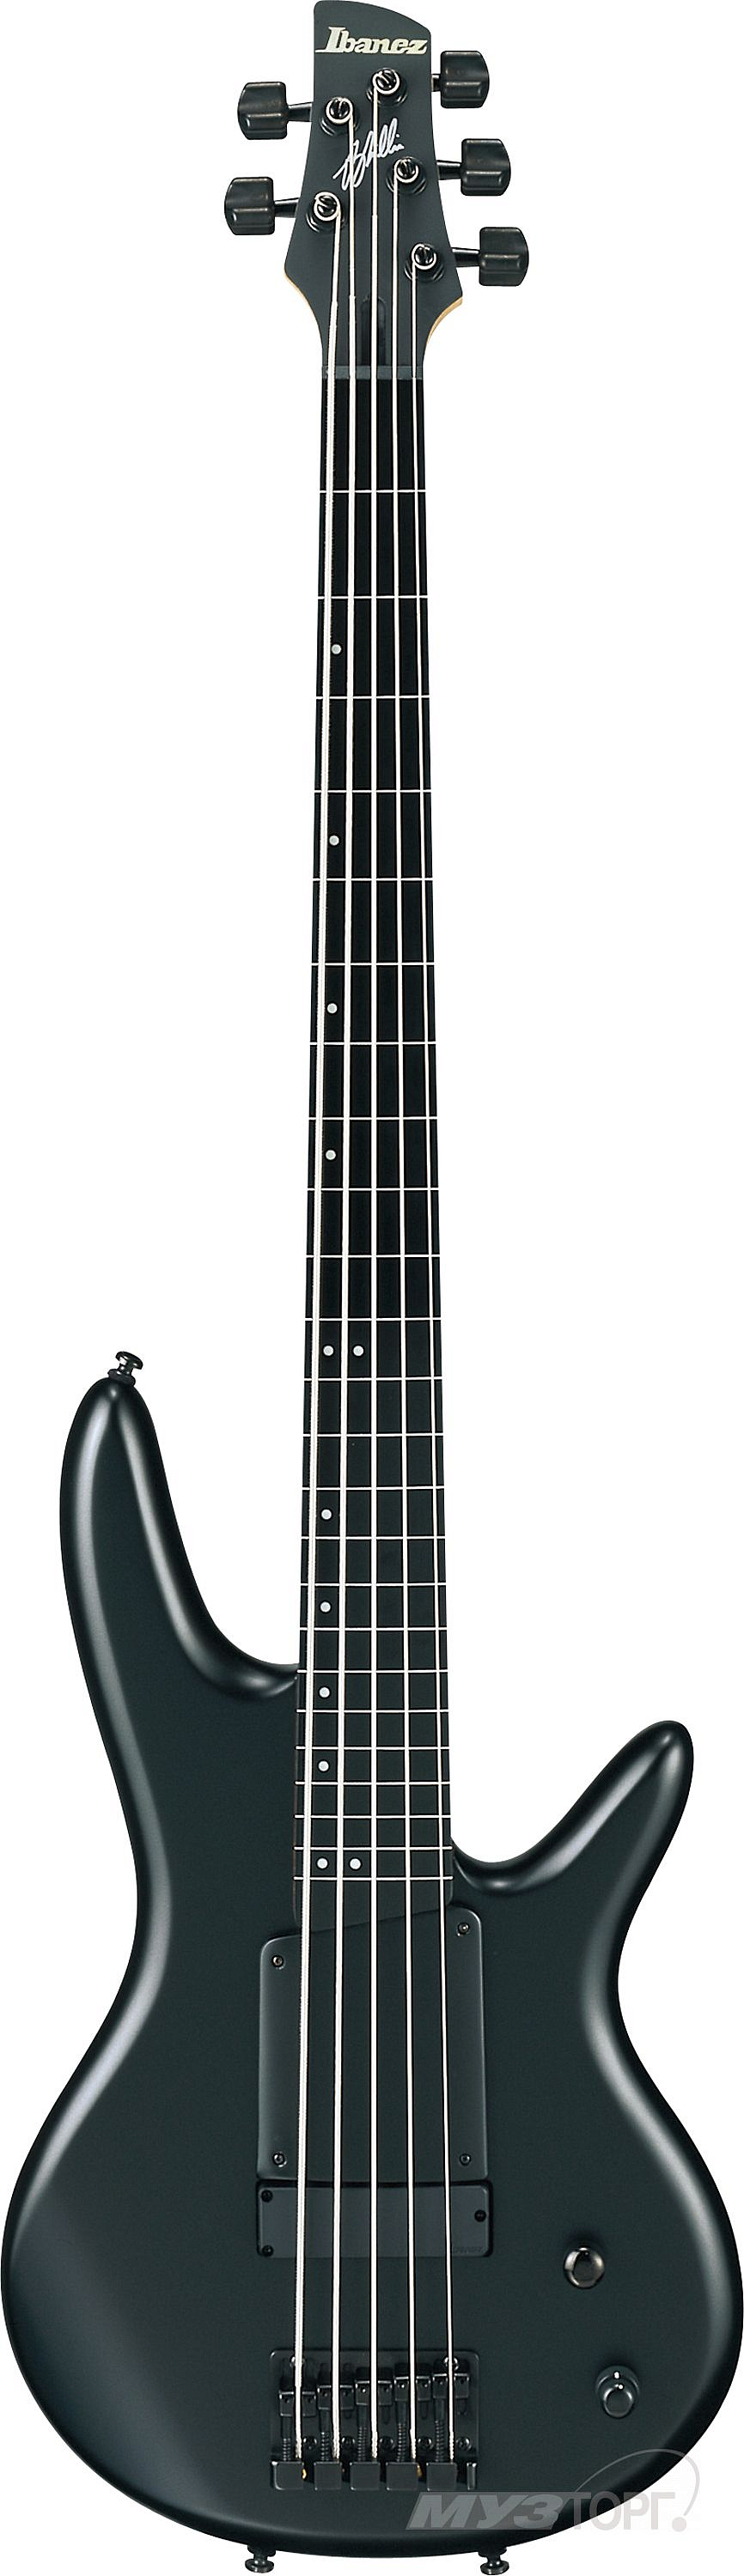 Ibanez GWB35 Black Flat 5-струнная бас-гитара | Продукция IBANEZ